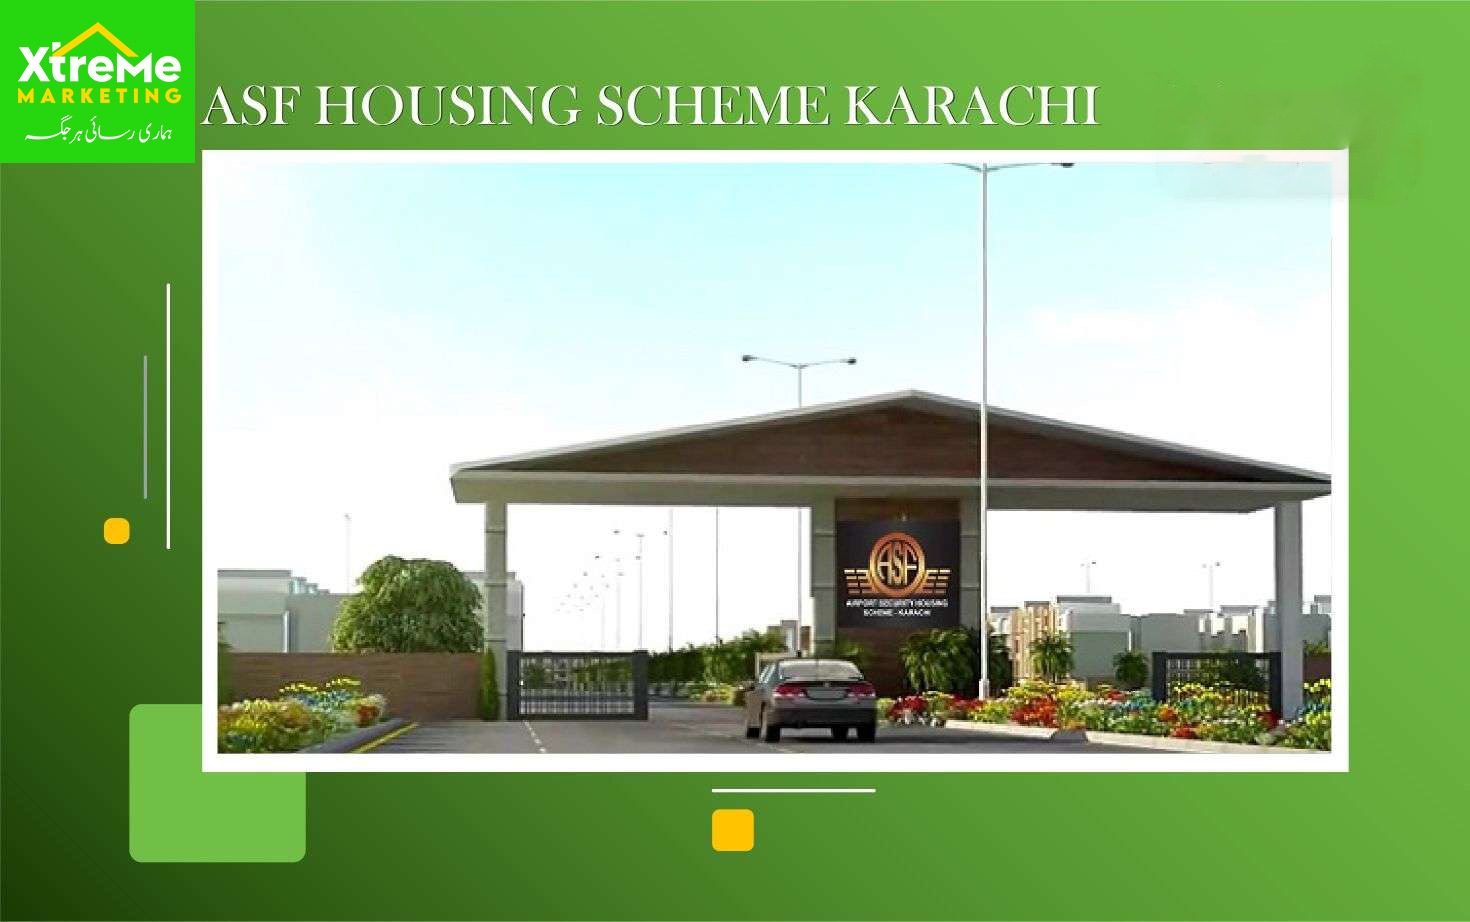 ASF Housing Society Karachi